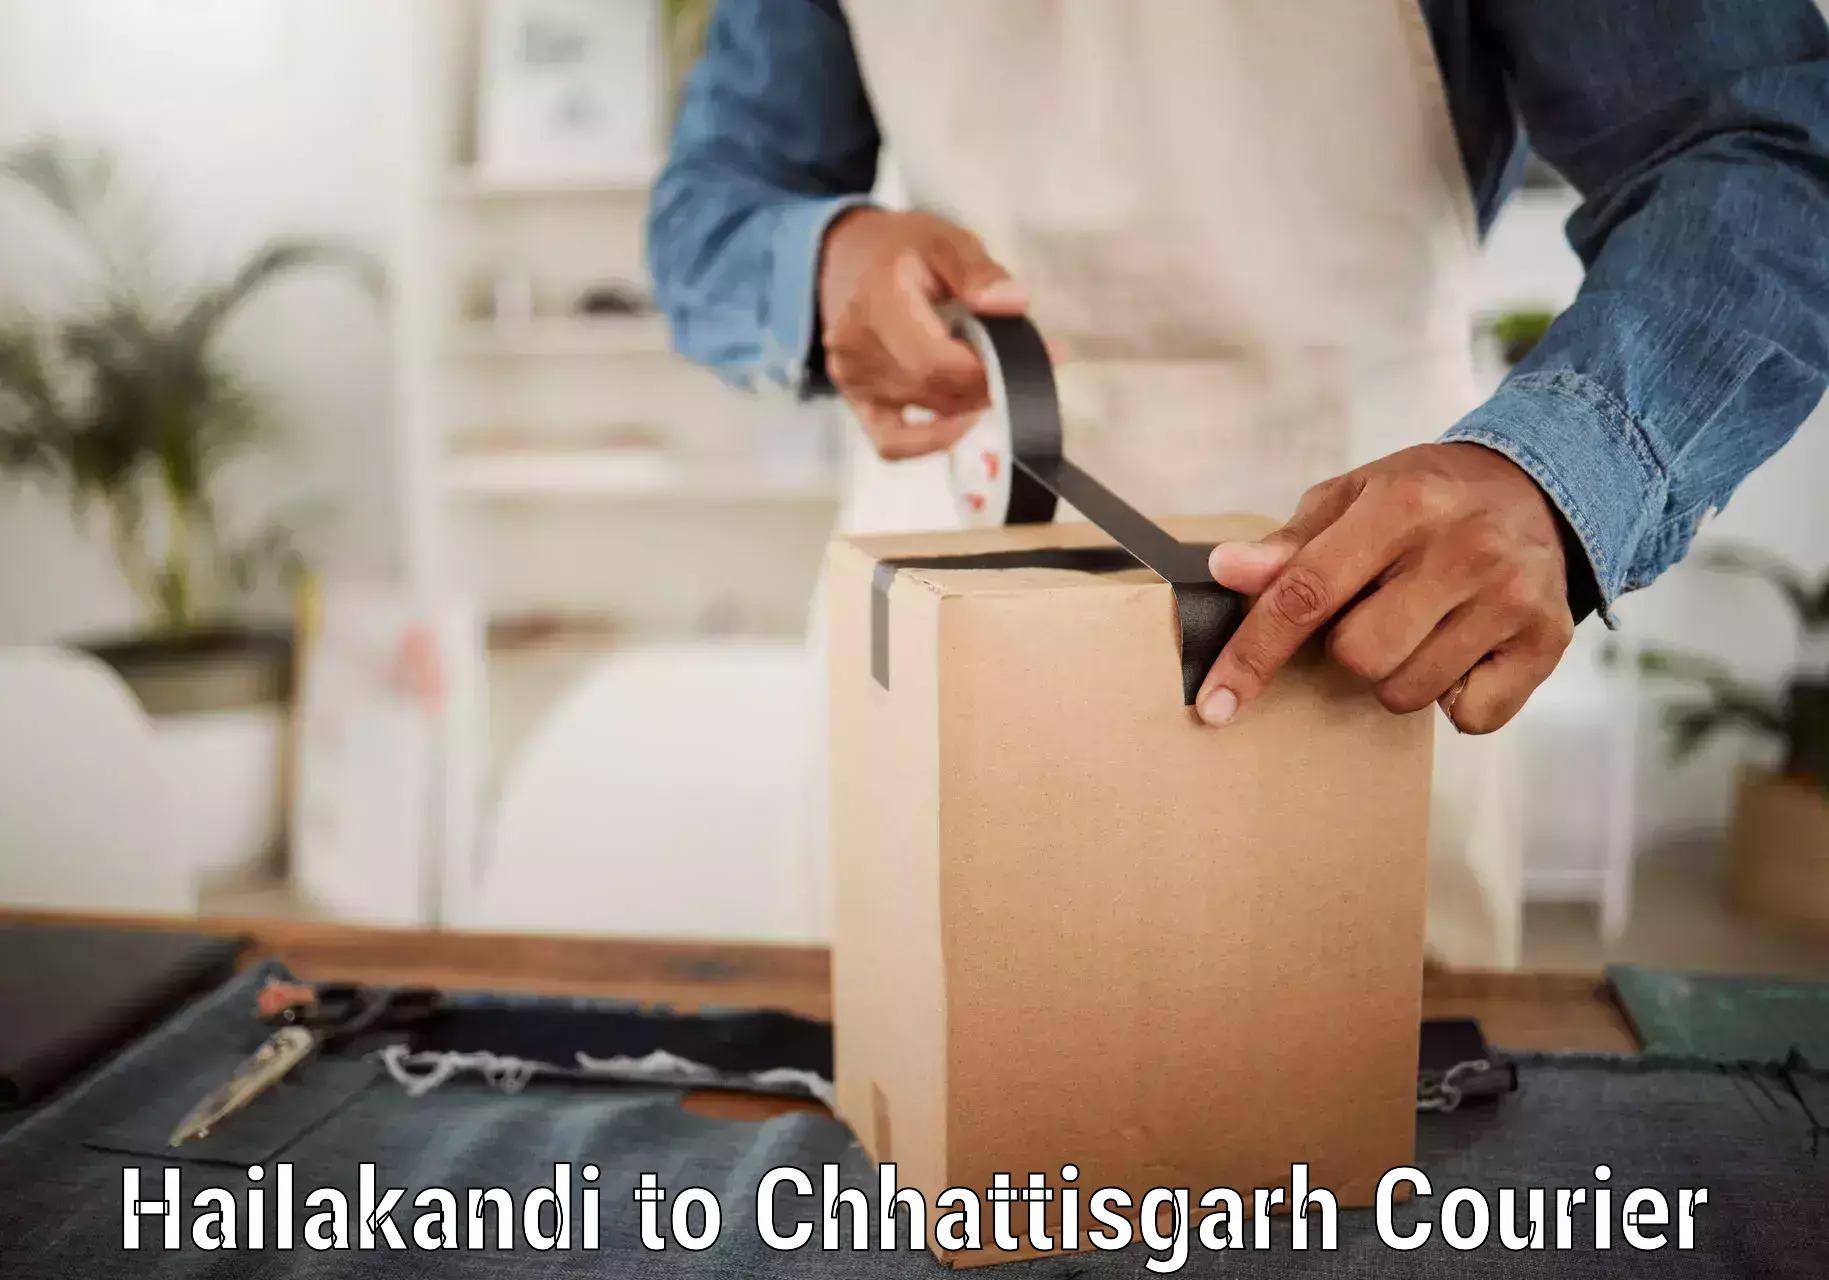 Customizable delivery plans Hailakandi to Patna Chhattisgarh